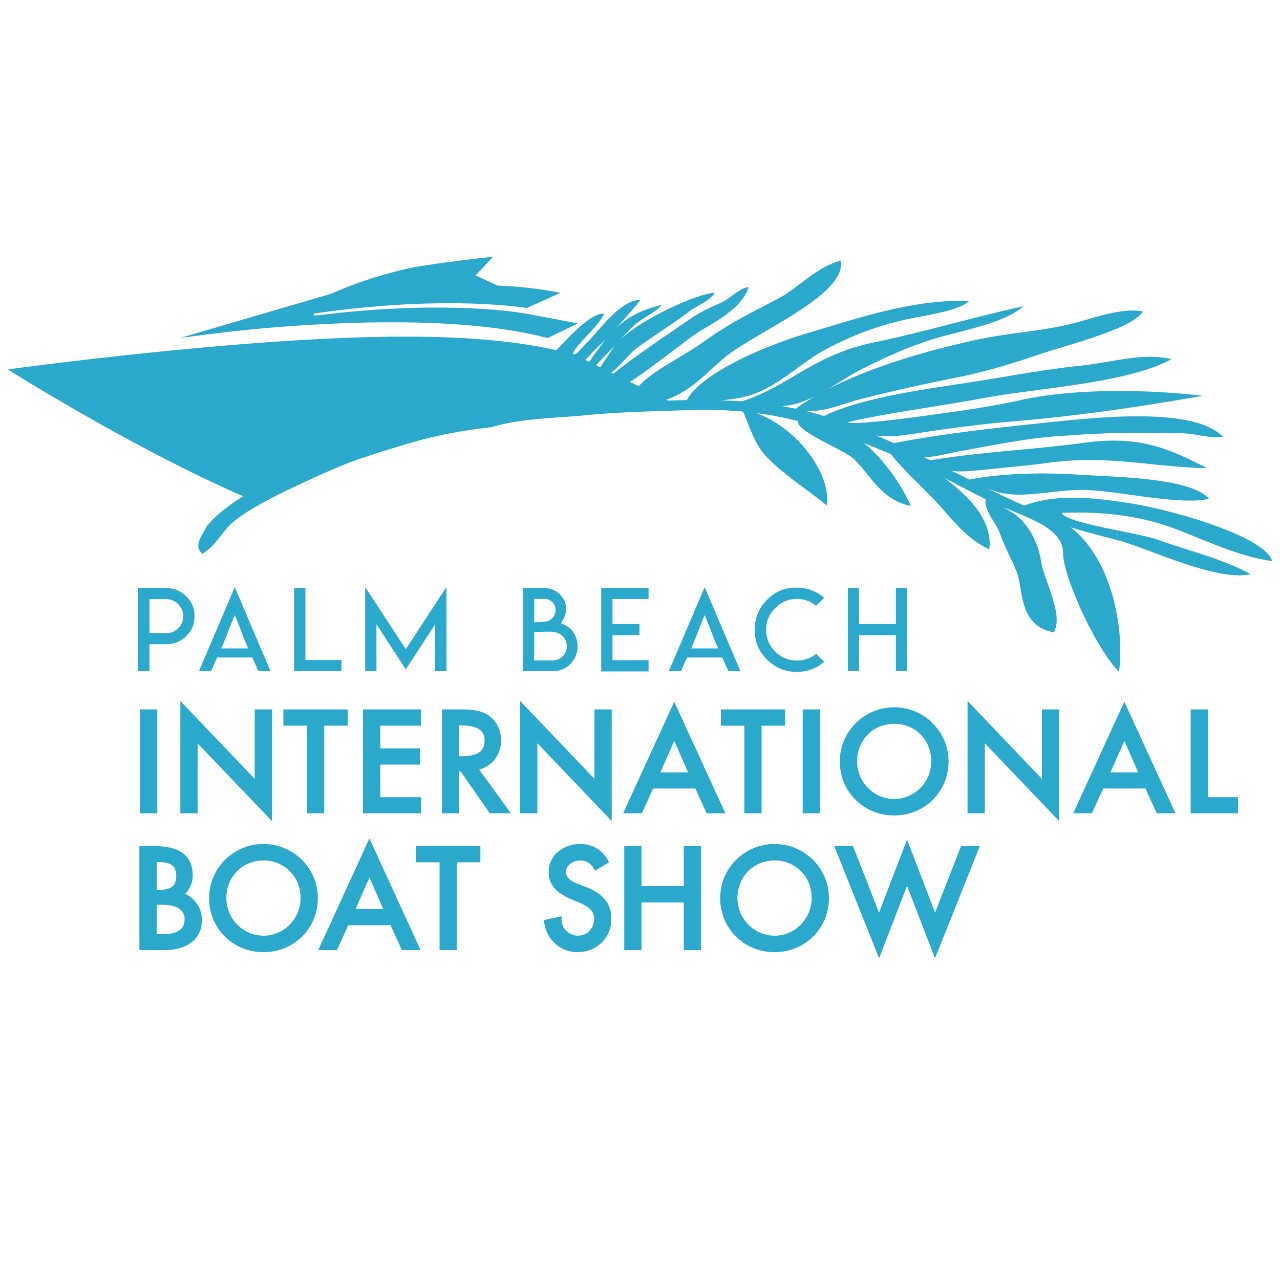 PALM BEACH INTERNATIONAL BOAT SHOW